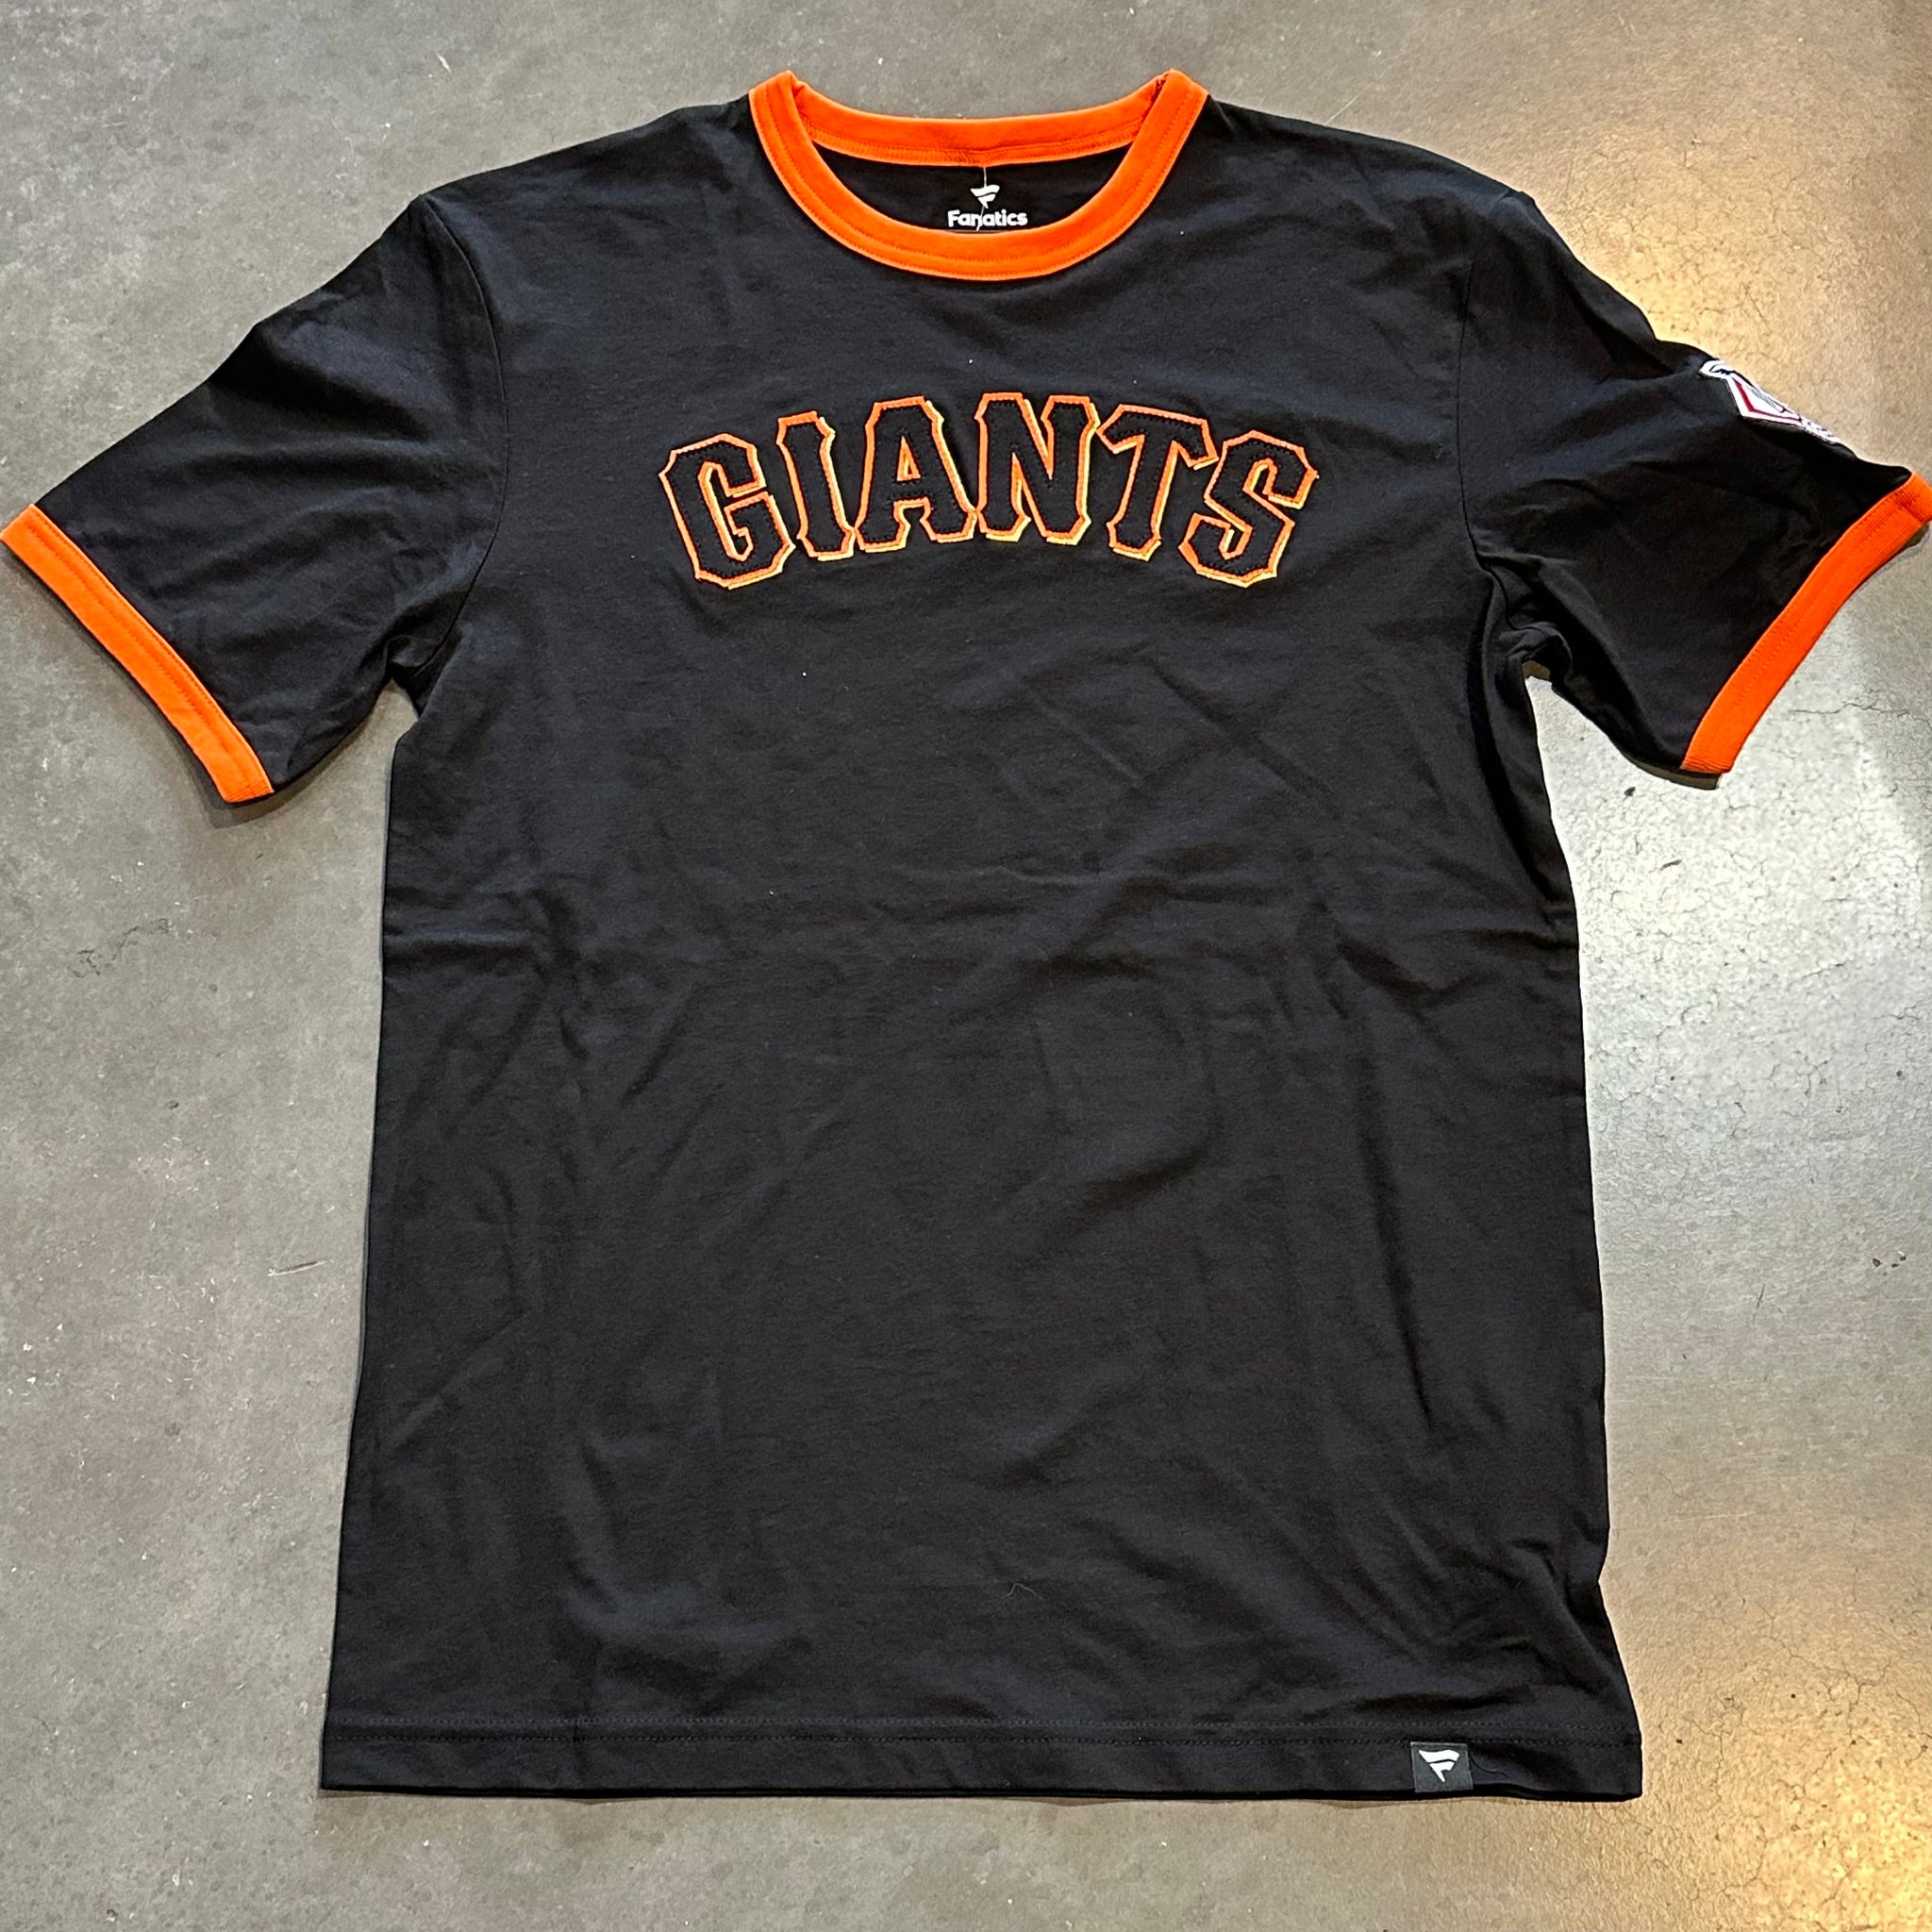 San Francisco Giants Fanatics Men's Forced Out T-Shirt